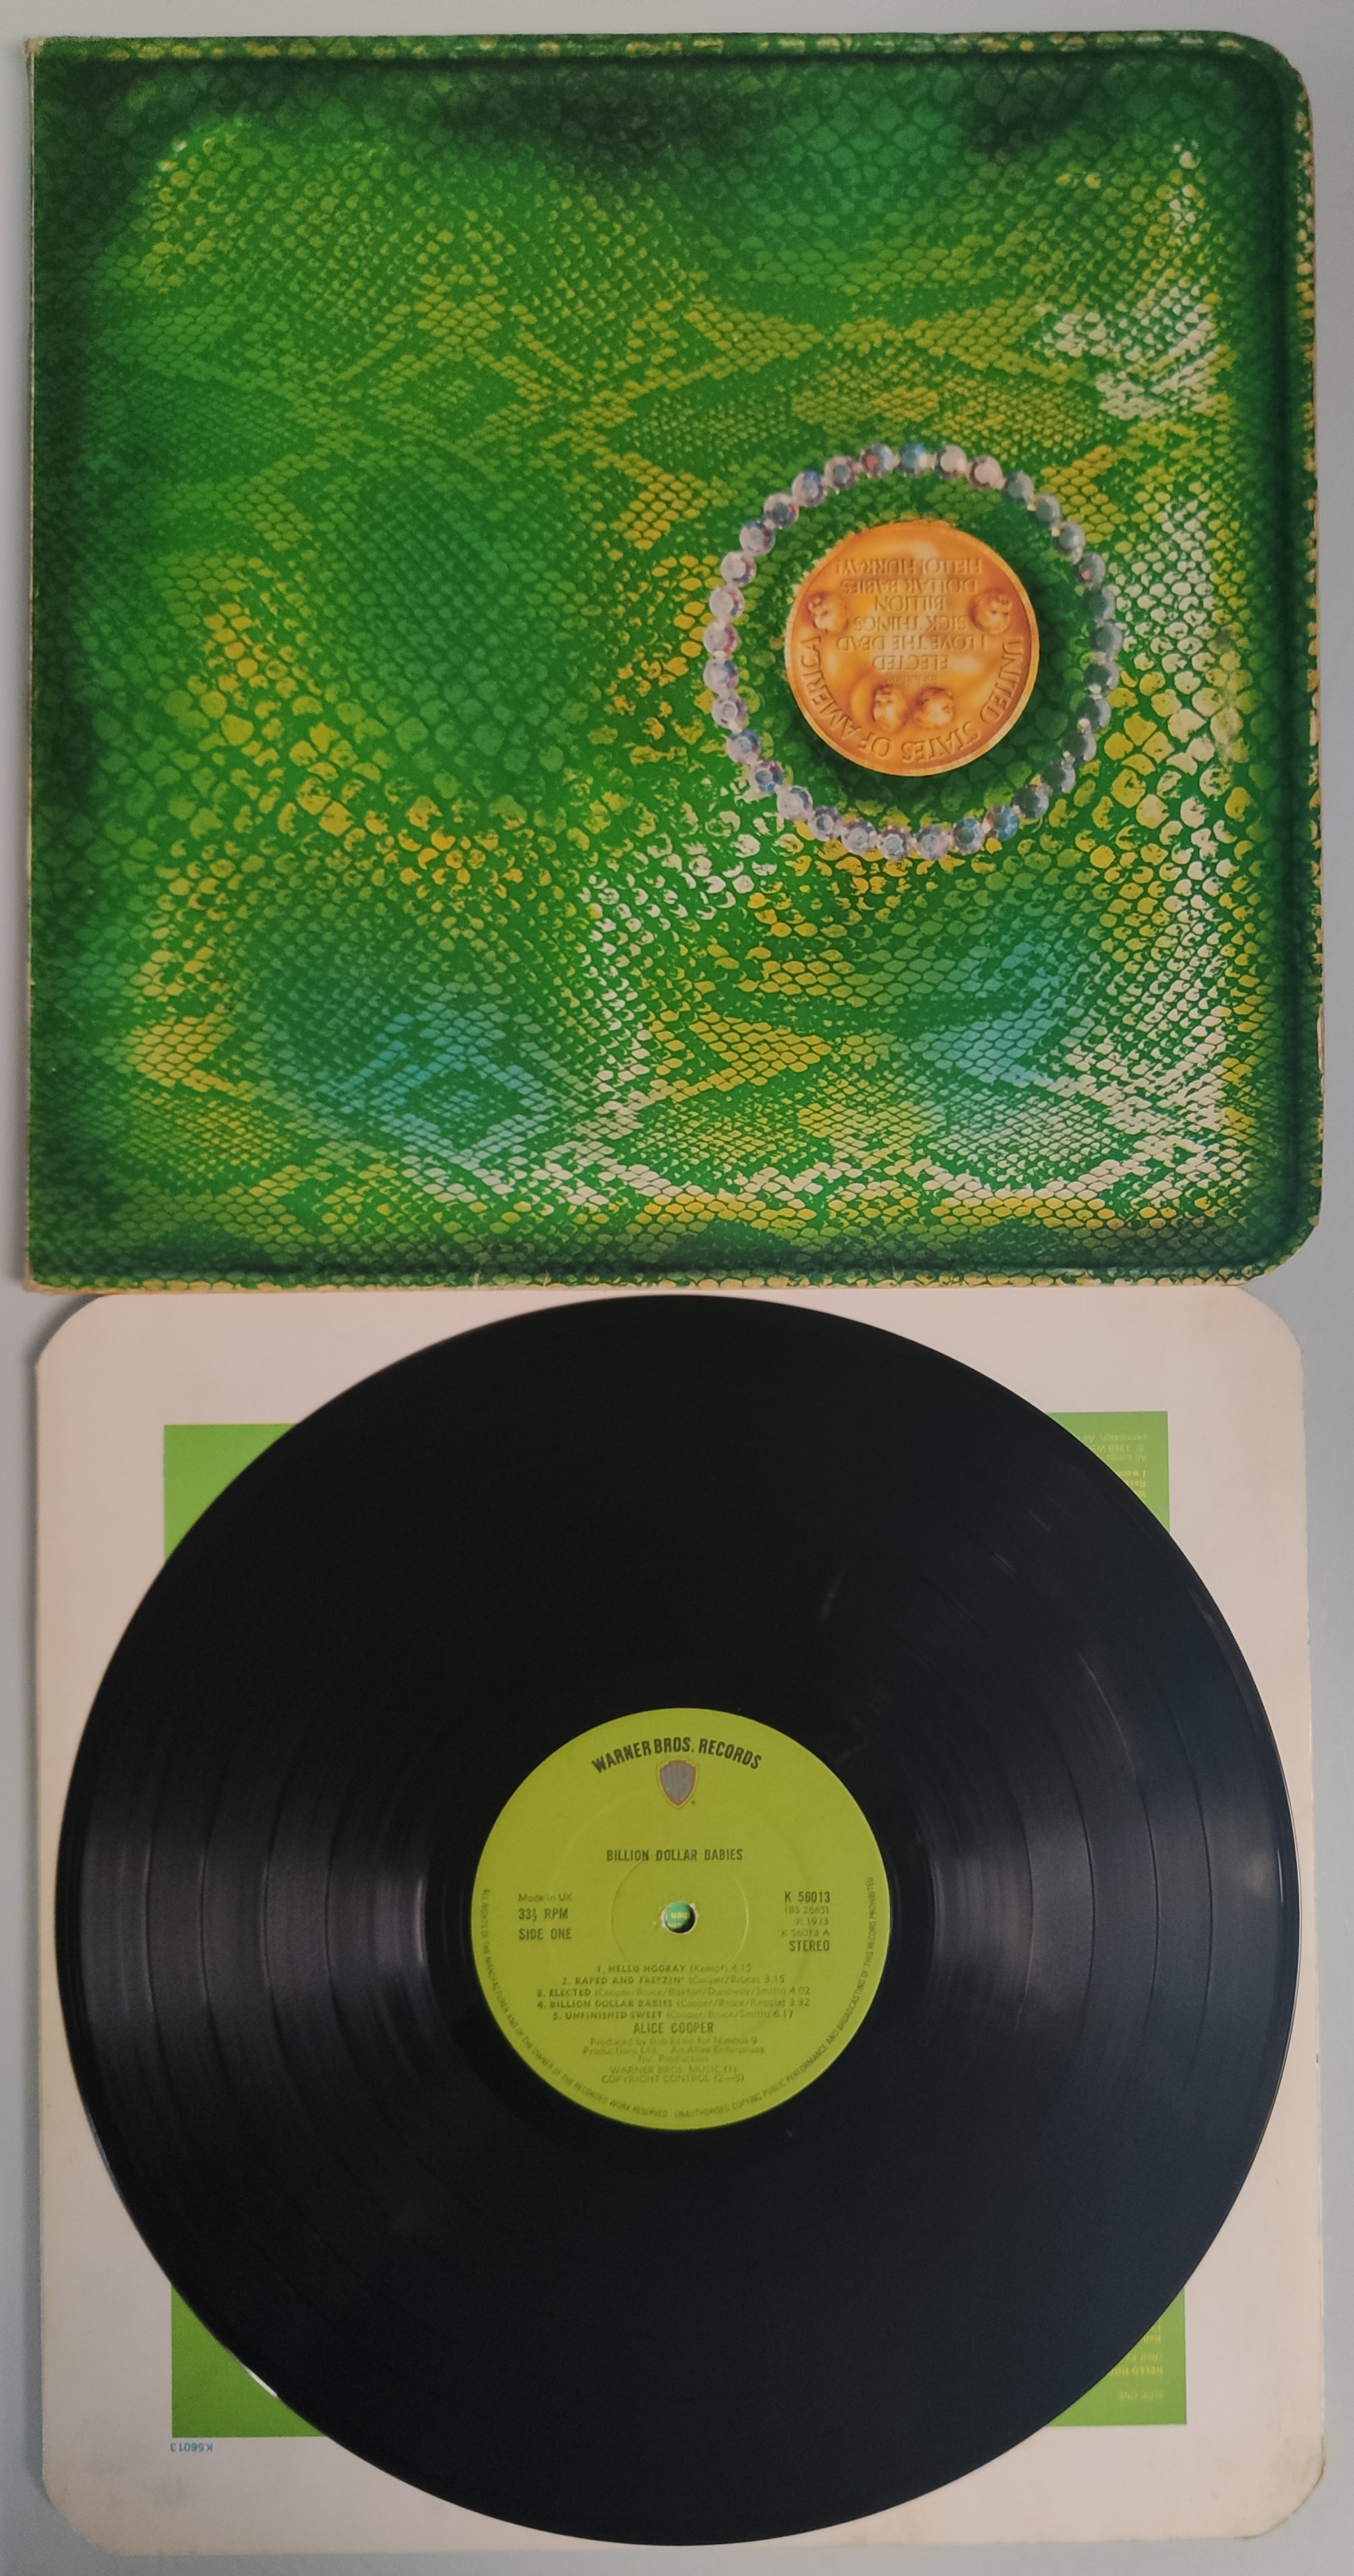 Alice Cooper – Billion Dollars Babies Vinyl LP – UK 1973 First Pressing. Matrix No A1 / B1